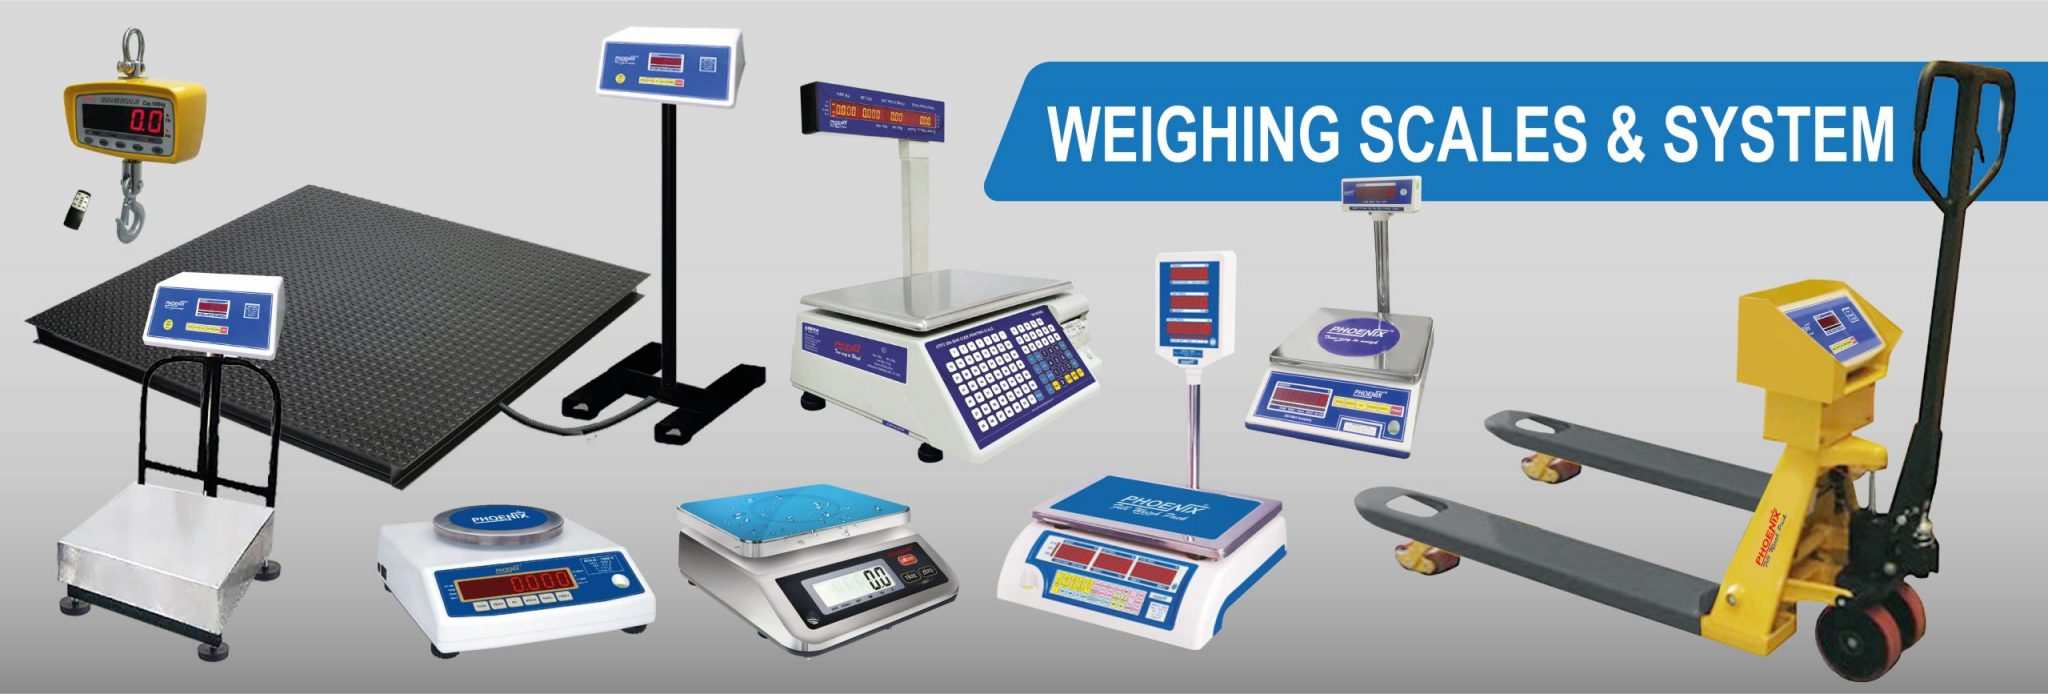 Weighing Scales & Machines Supplier in Dubai, UAE - Phoenix Dison Tec LLC